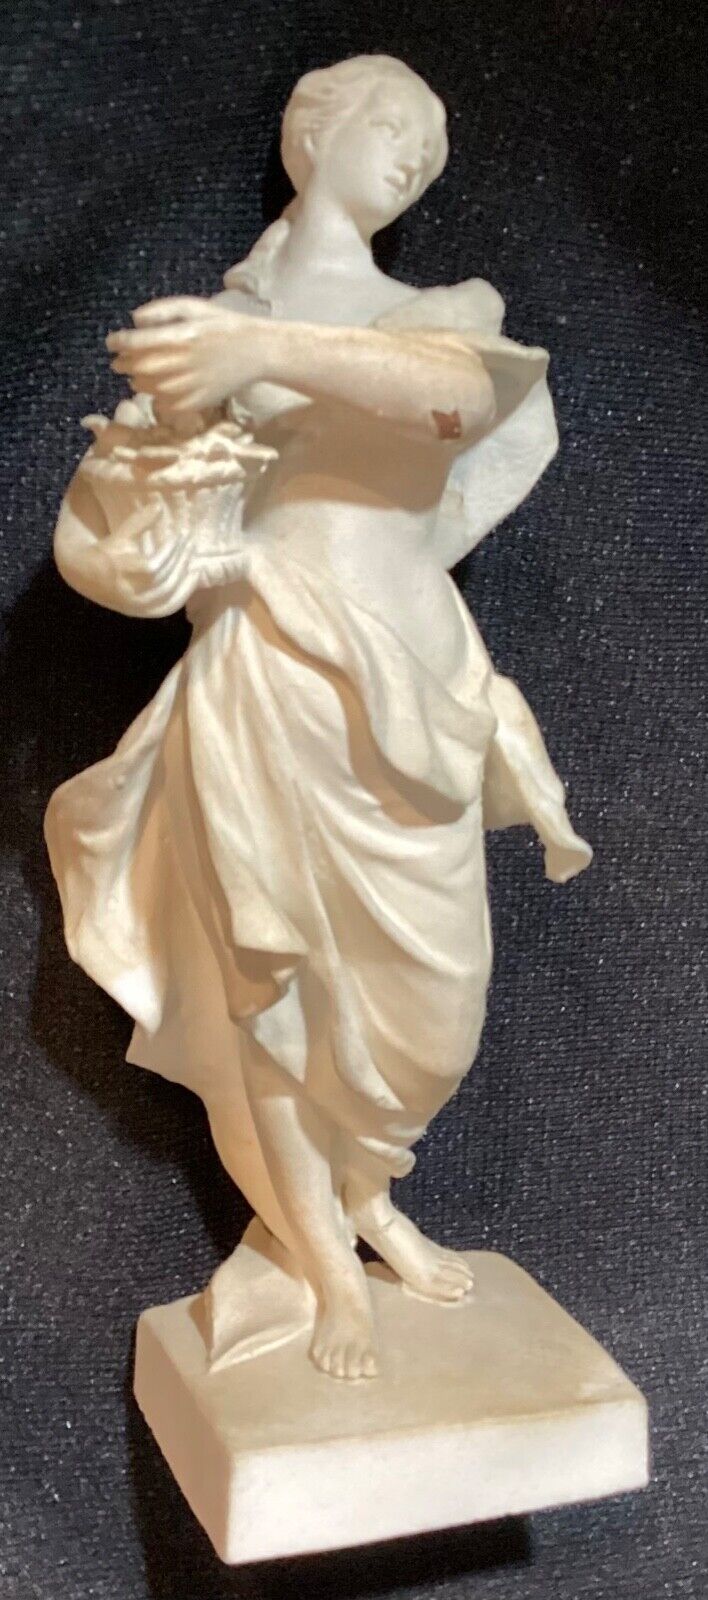 Fine Antique French Sevres Bisque Porcelain Figurine Spring Girl Allegory 1700s?